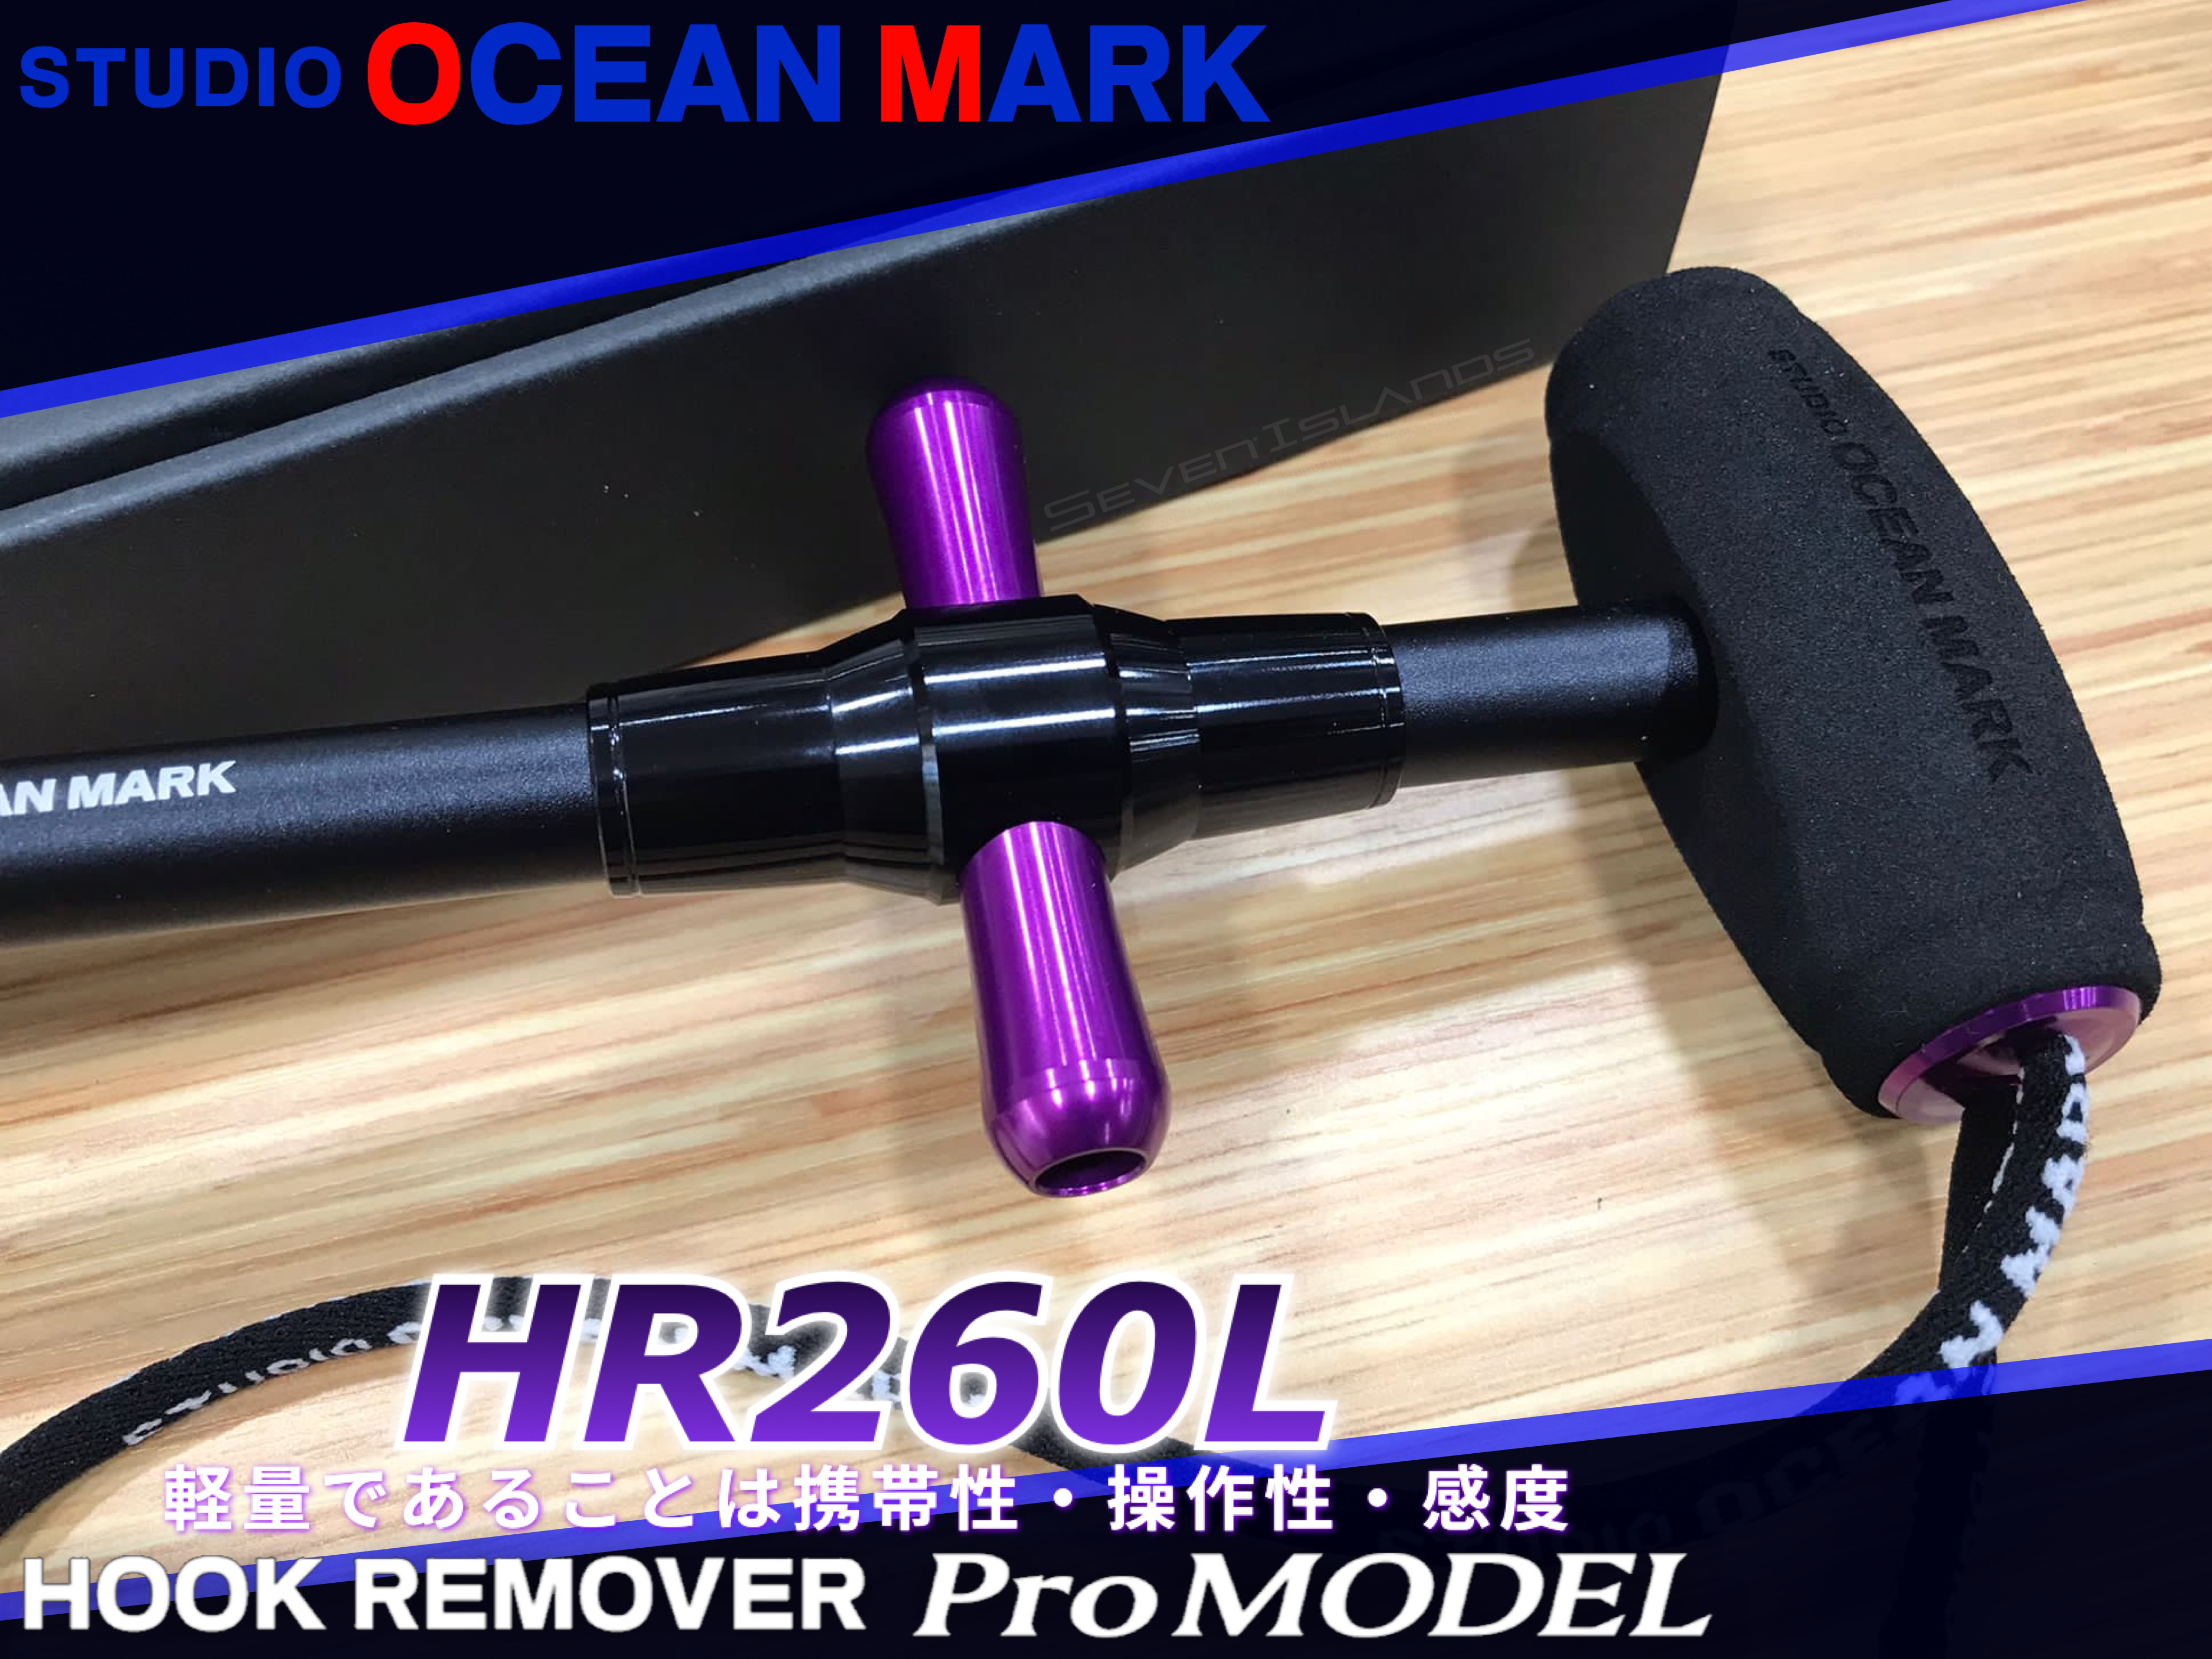 STUDIO OCEAN MARK HR260L HOOK REMOVER PRO MODEL